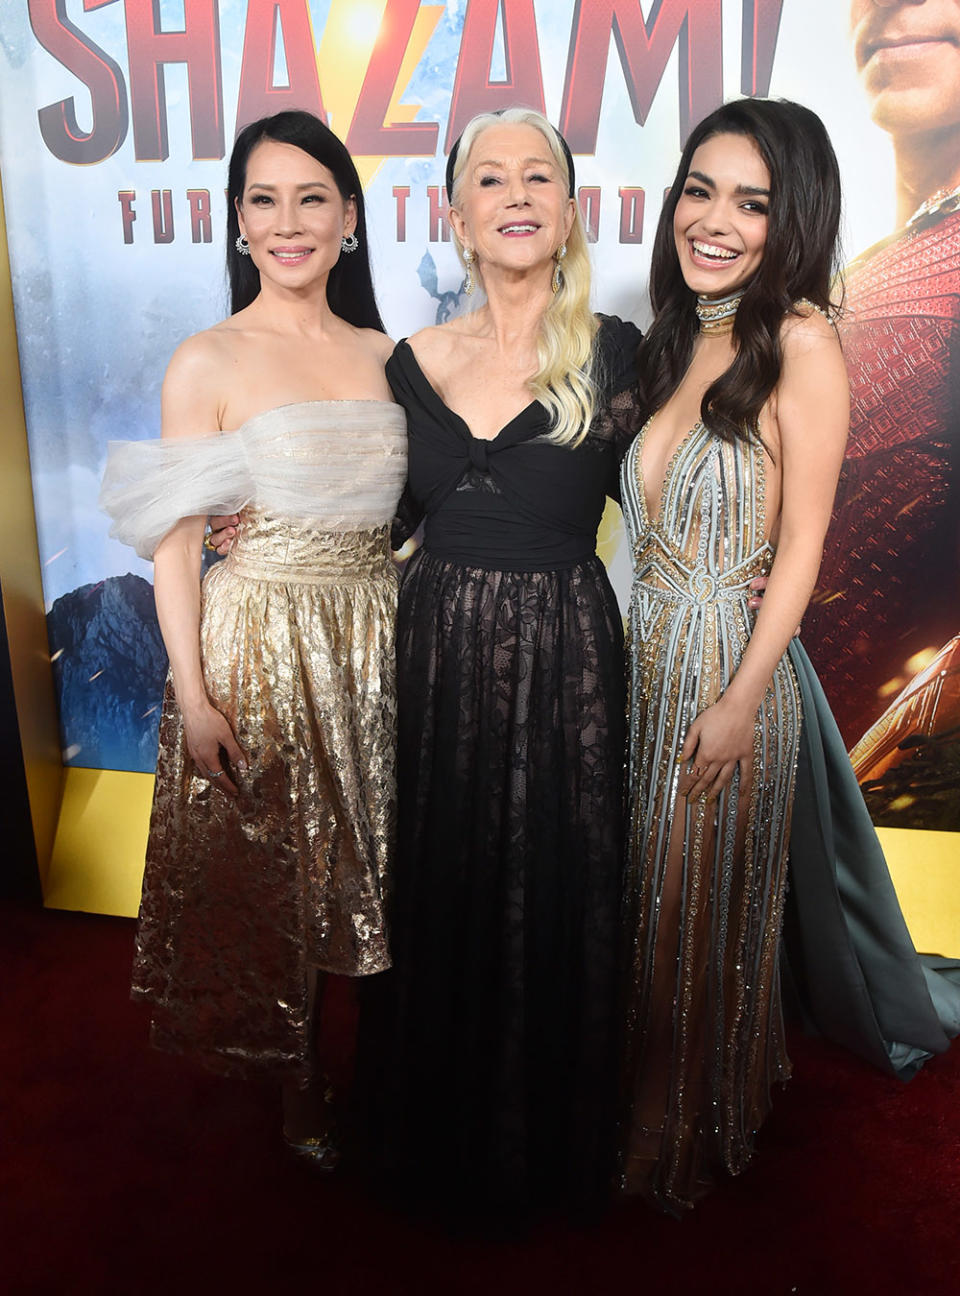 (L-R) Lucy Liu, Helen Mirren and Rachel Zegler attend the premiere of Warner Bros.' "Shazam! Fury Of The Gods" at Regency Village Theatre on March 14, 2023 in Los Angeles, California.